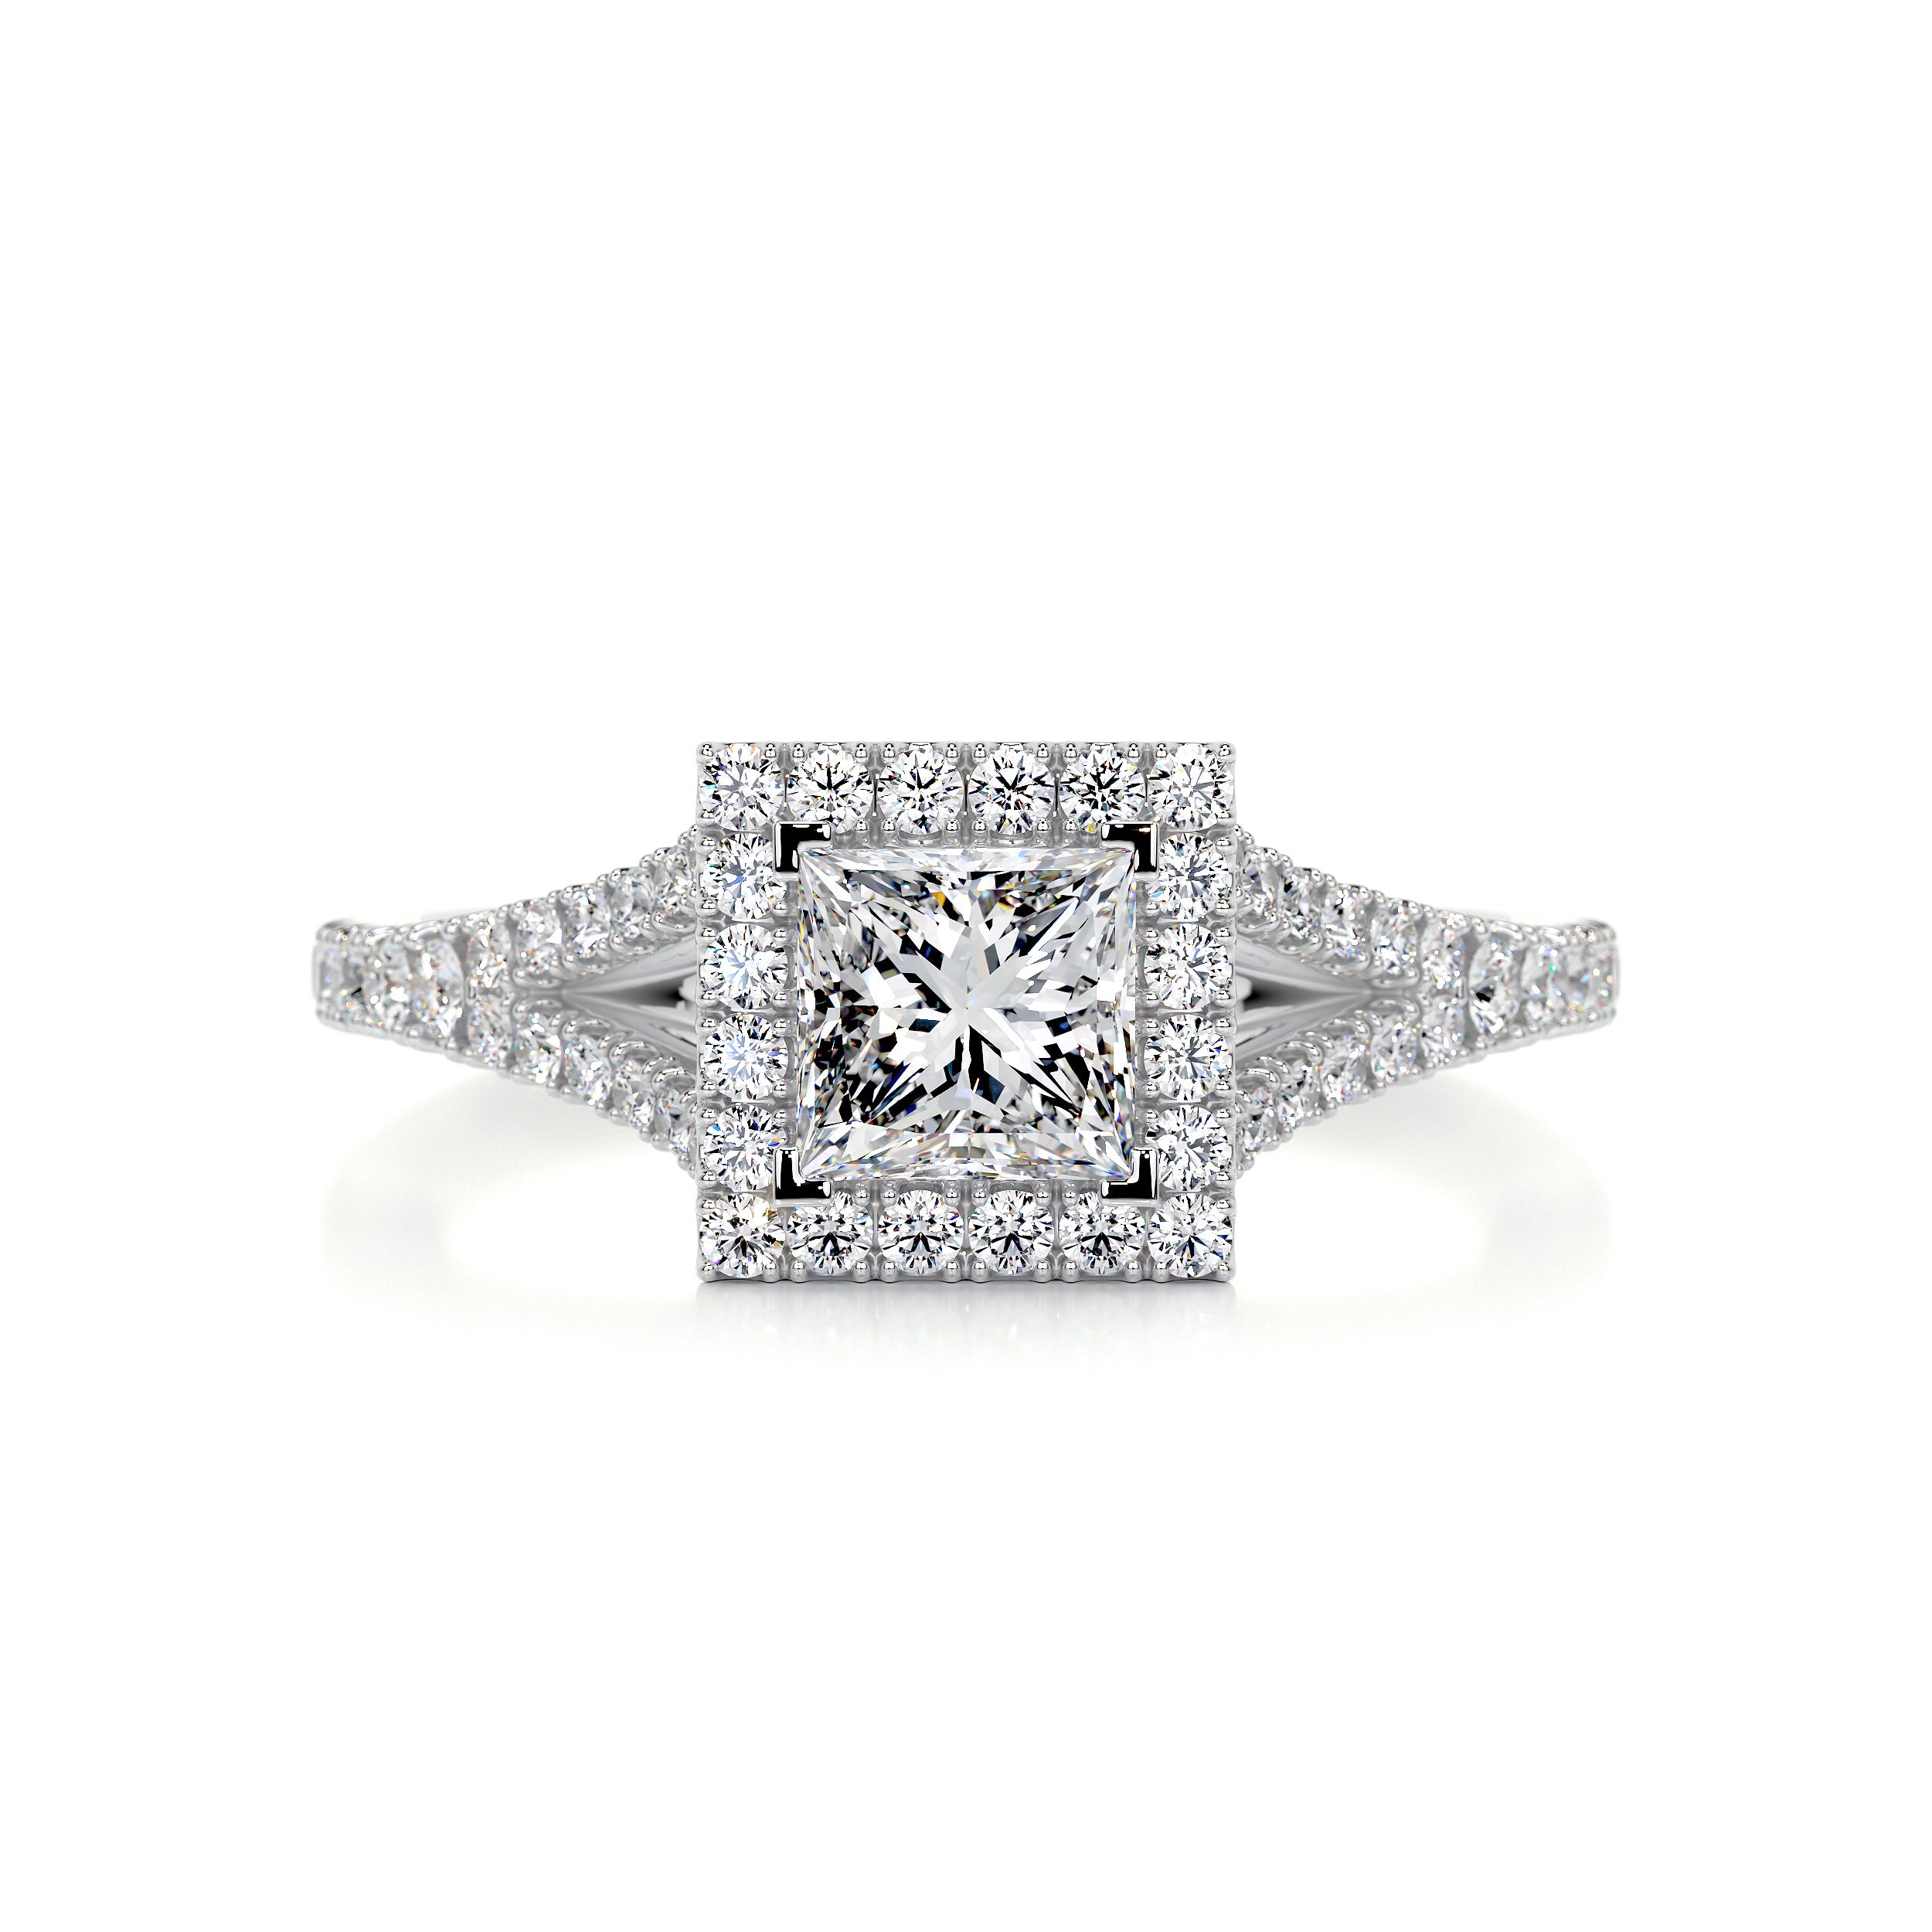 Celia Diamond Engagement Ring   (1.25 Carat) -14K White Gold